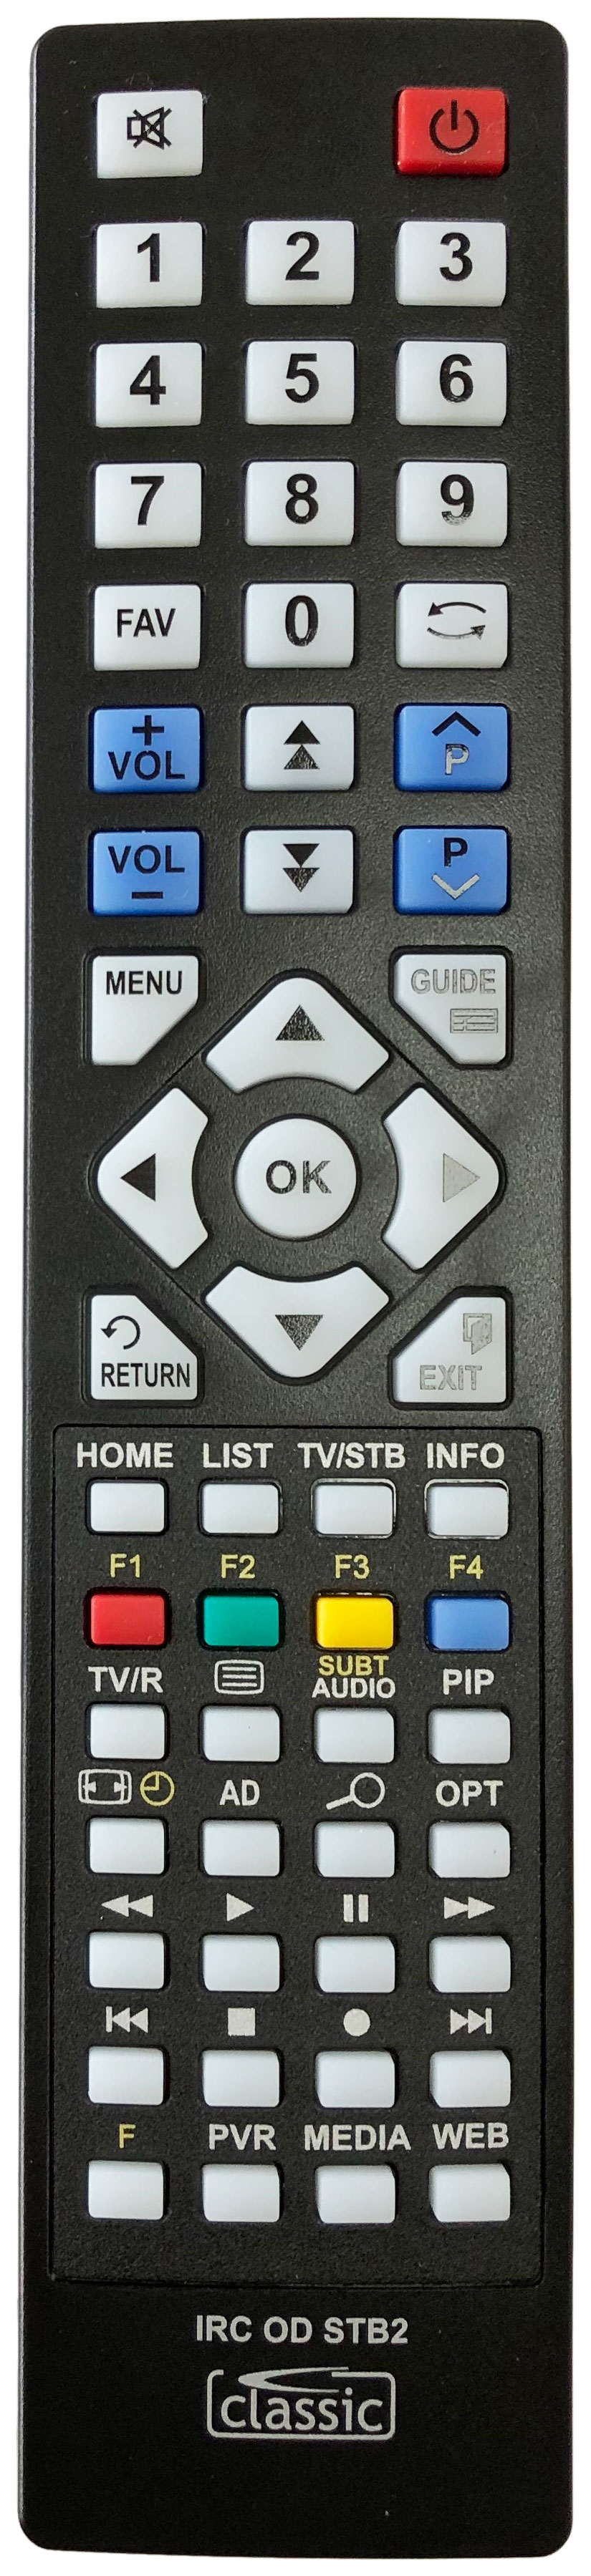 MANHATTAN PLAZA DS-100A Remote Control